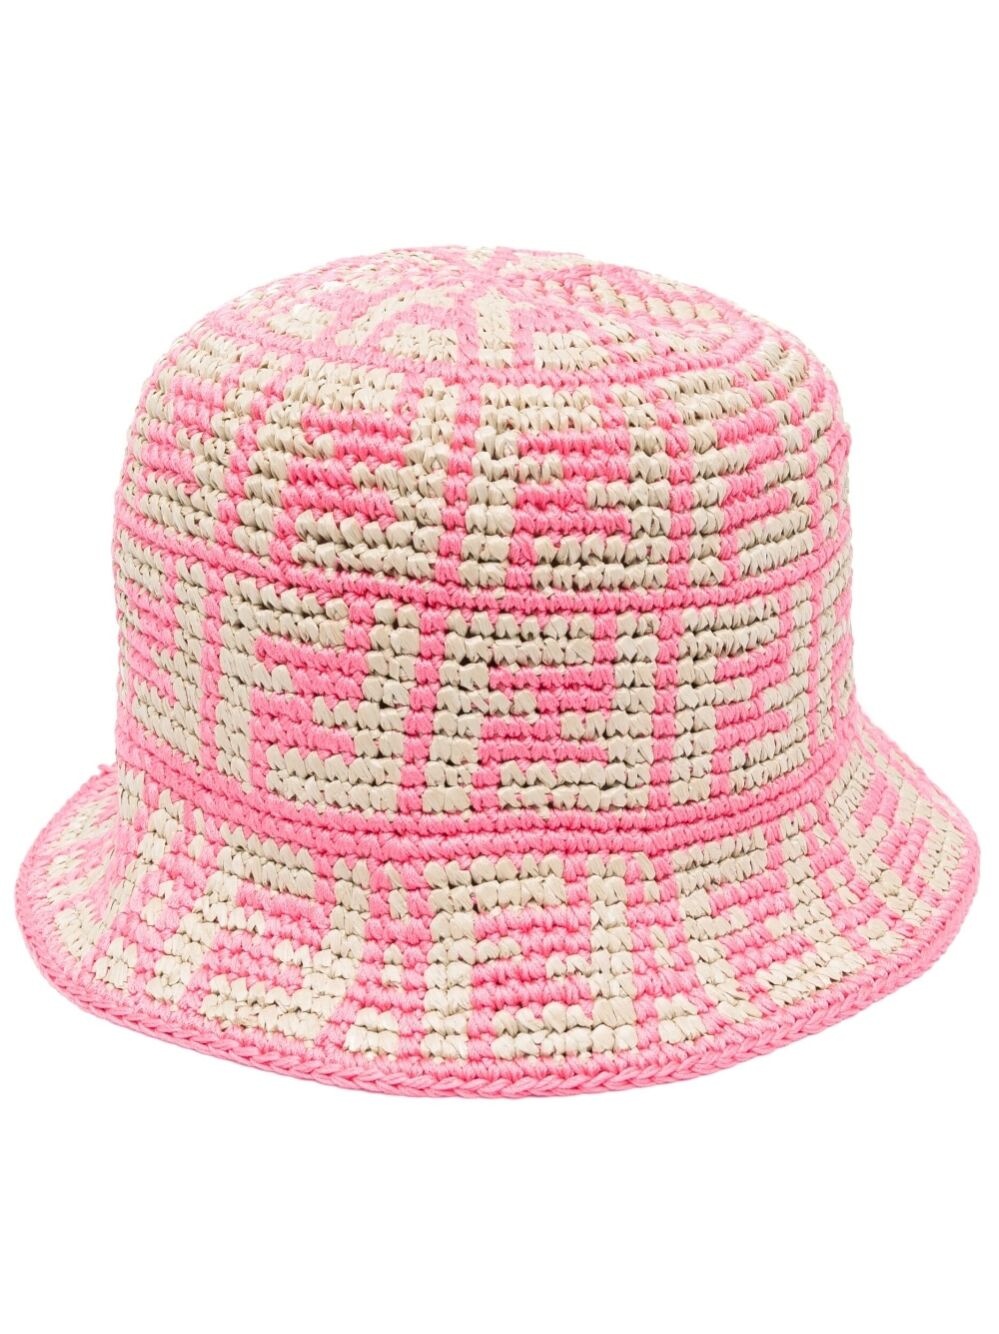 Ff bucket hat - 1